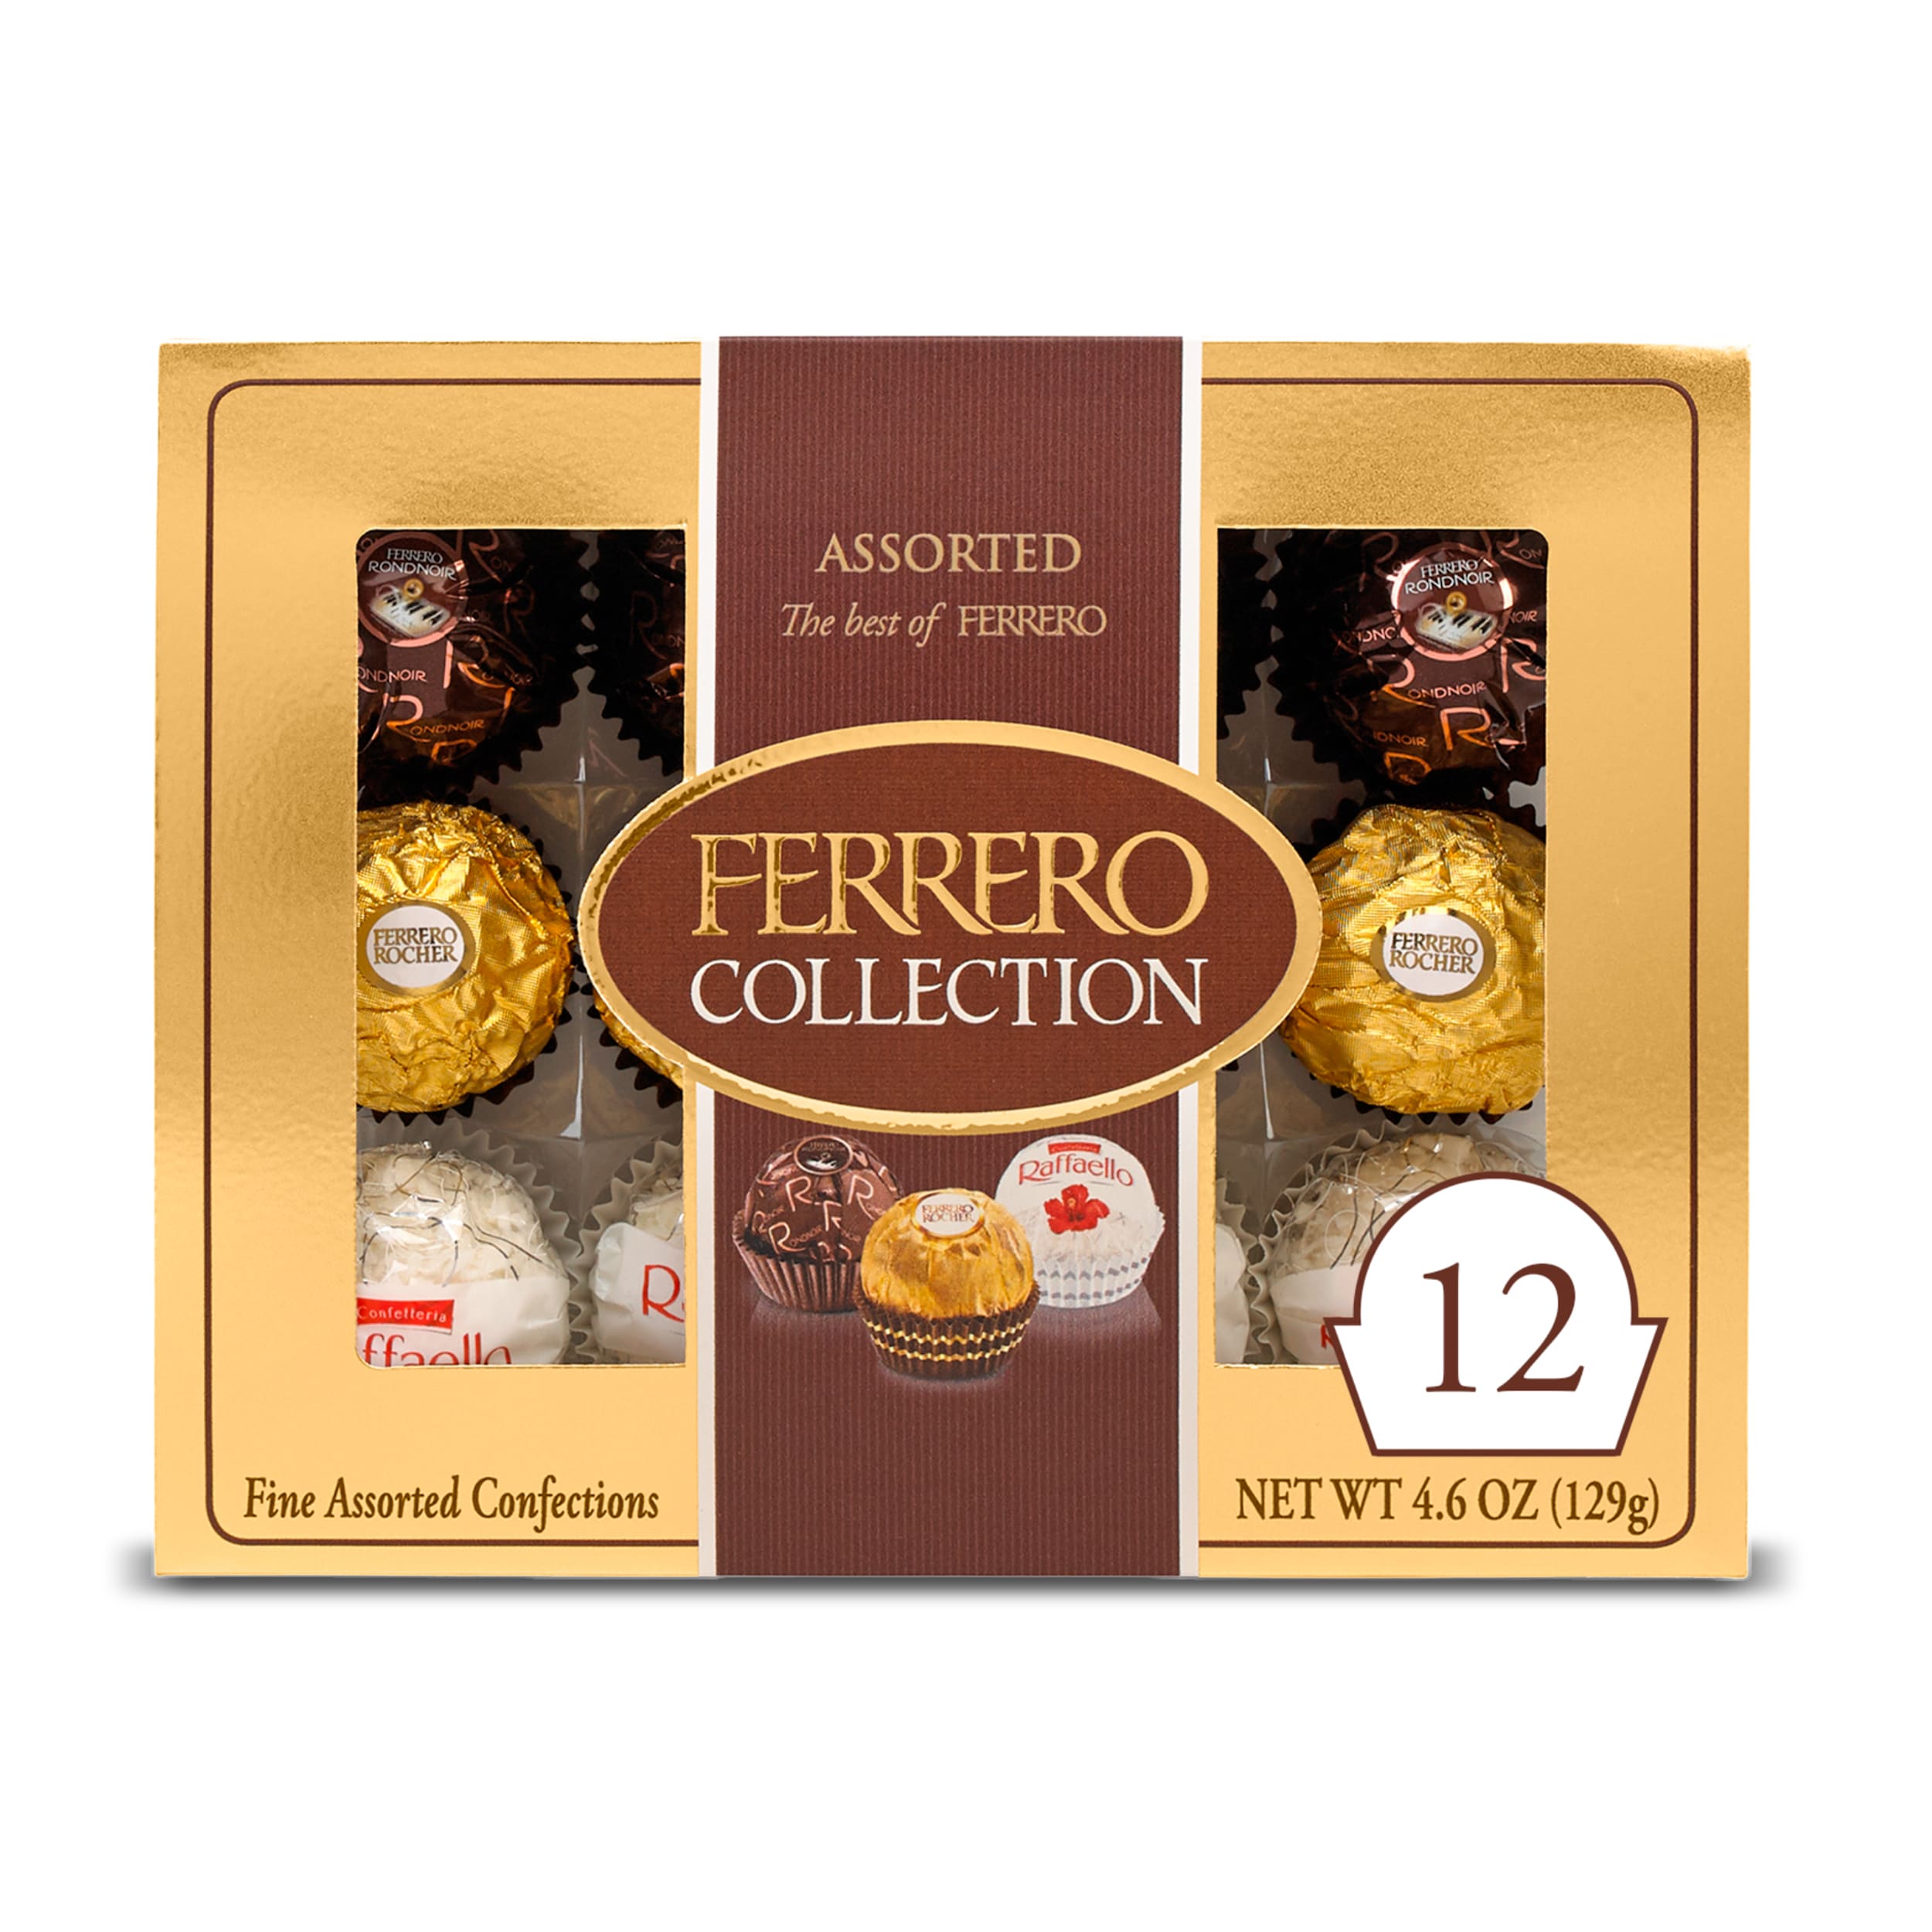 Ferrero Collection Premium Assorted Hazelnut Milk And Dark Chocolate And Coconut, 12 Count - image 1 of 8